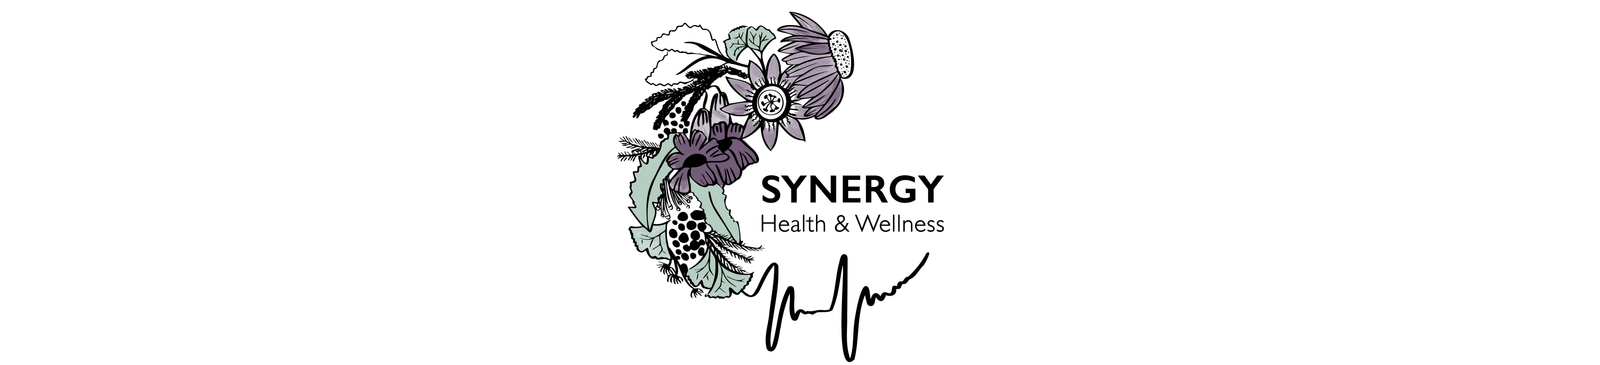 Synergy Health And Wellness